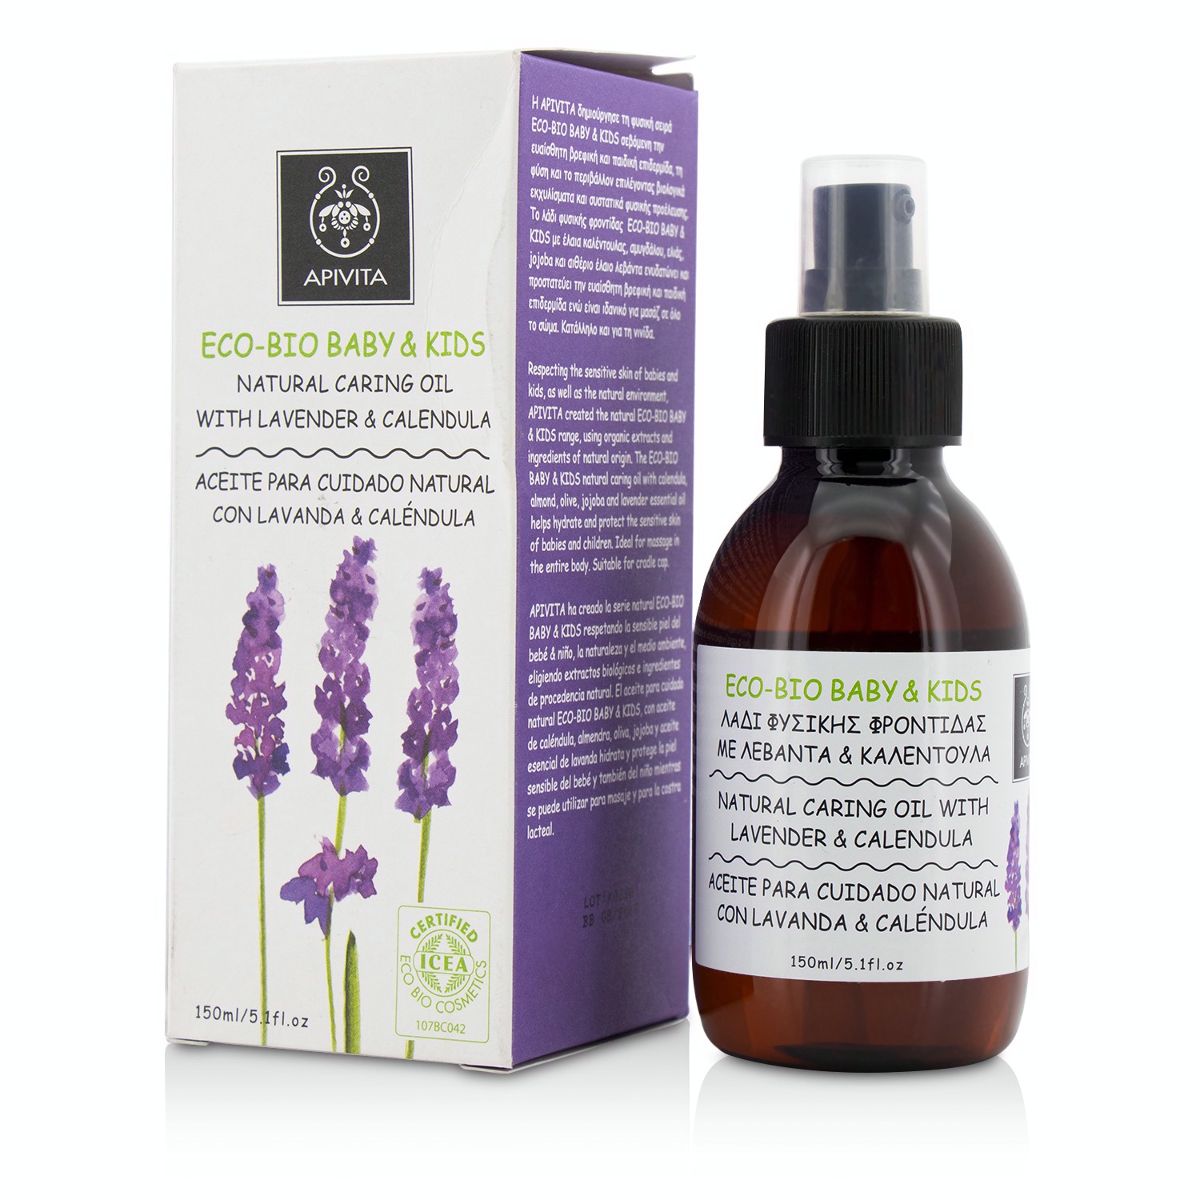 Eco-Bio Baby  Kids Natural Caring Oil With Lavender  Calendula Apivita Image